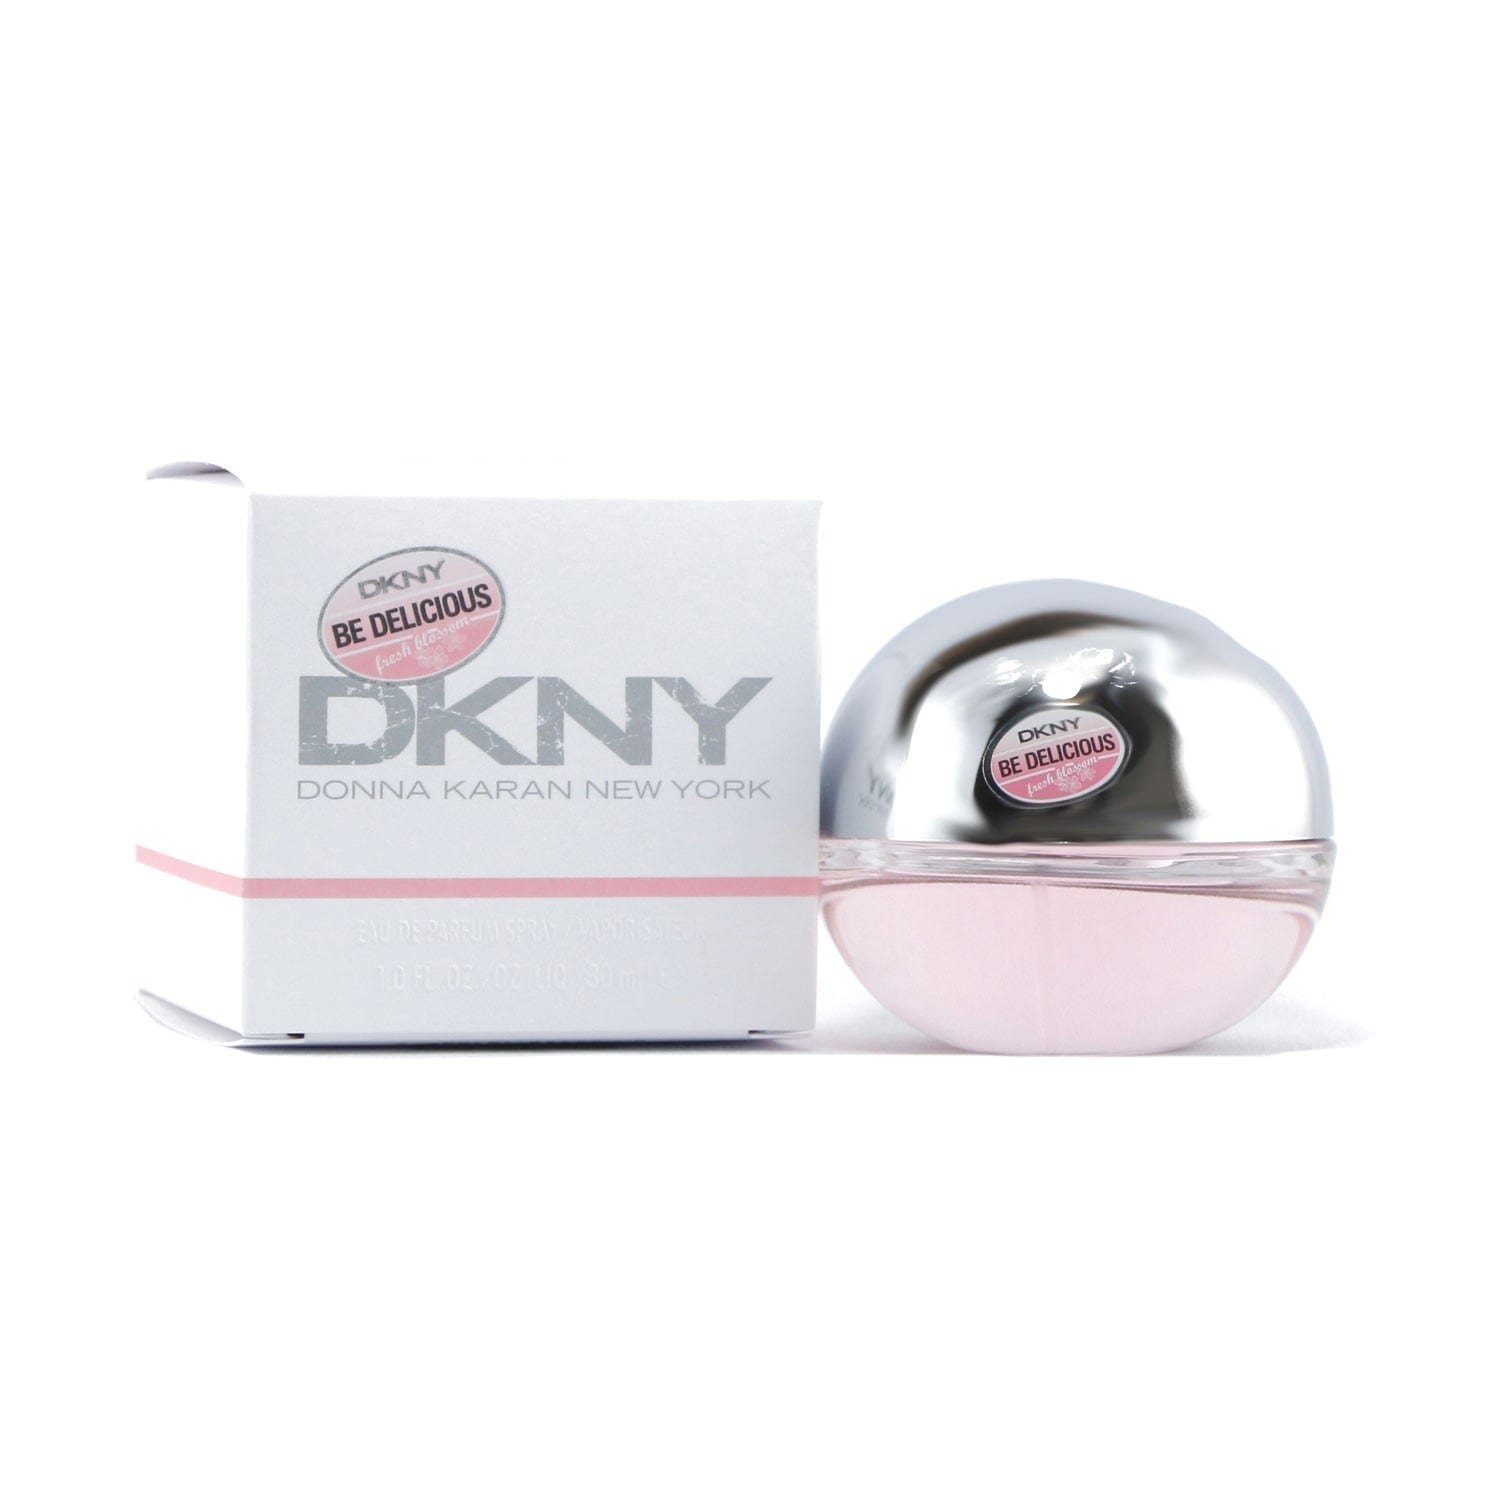 Dkny be delicious fresh blossom. Donna Karan DKNY be delicious Fresh Blossom. Духи Донна Каран розовое яблоко. DKNY духи 30ml розовые.